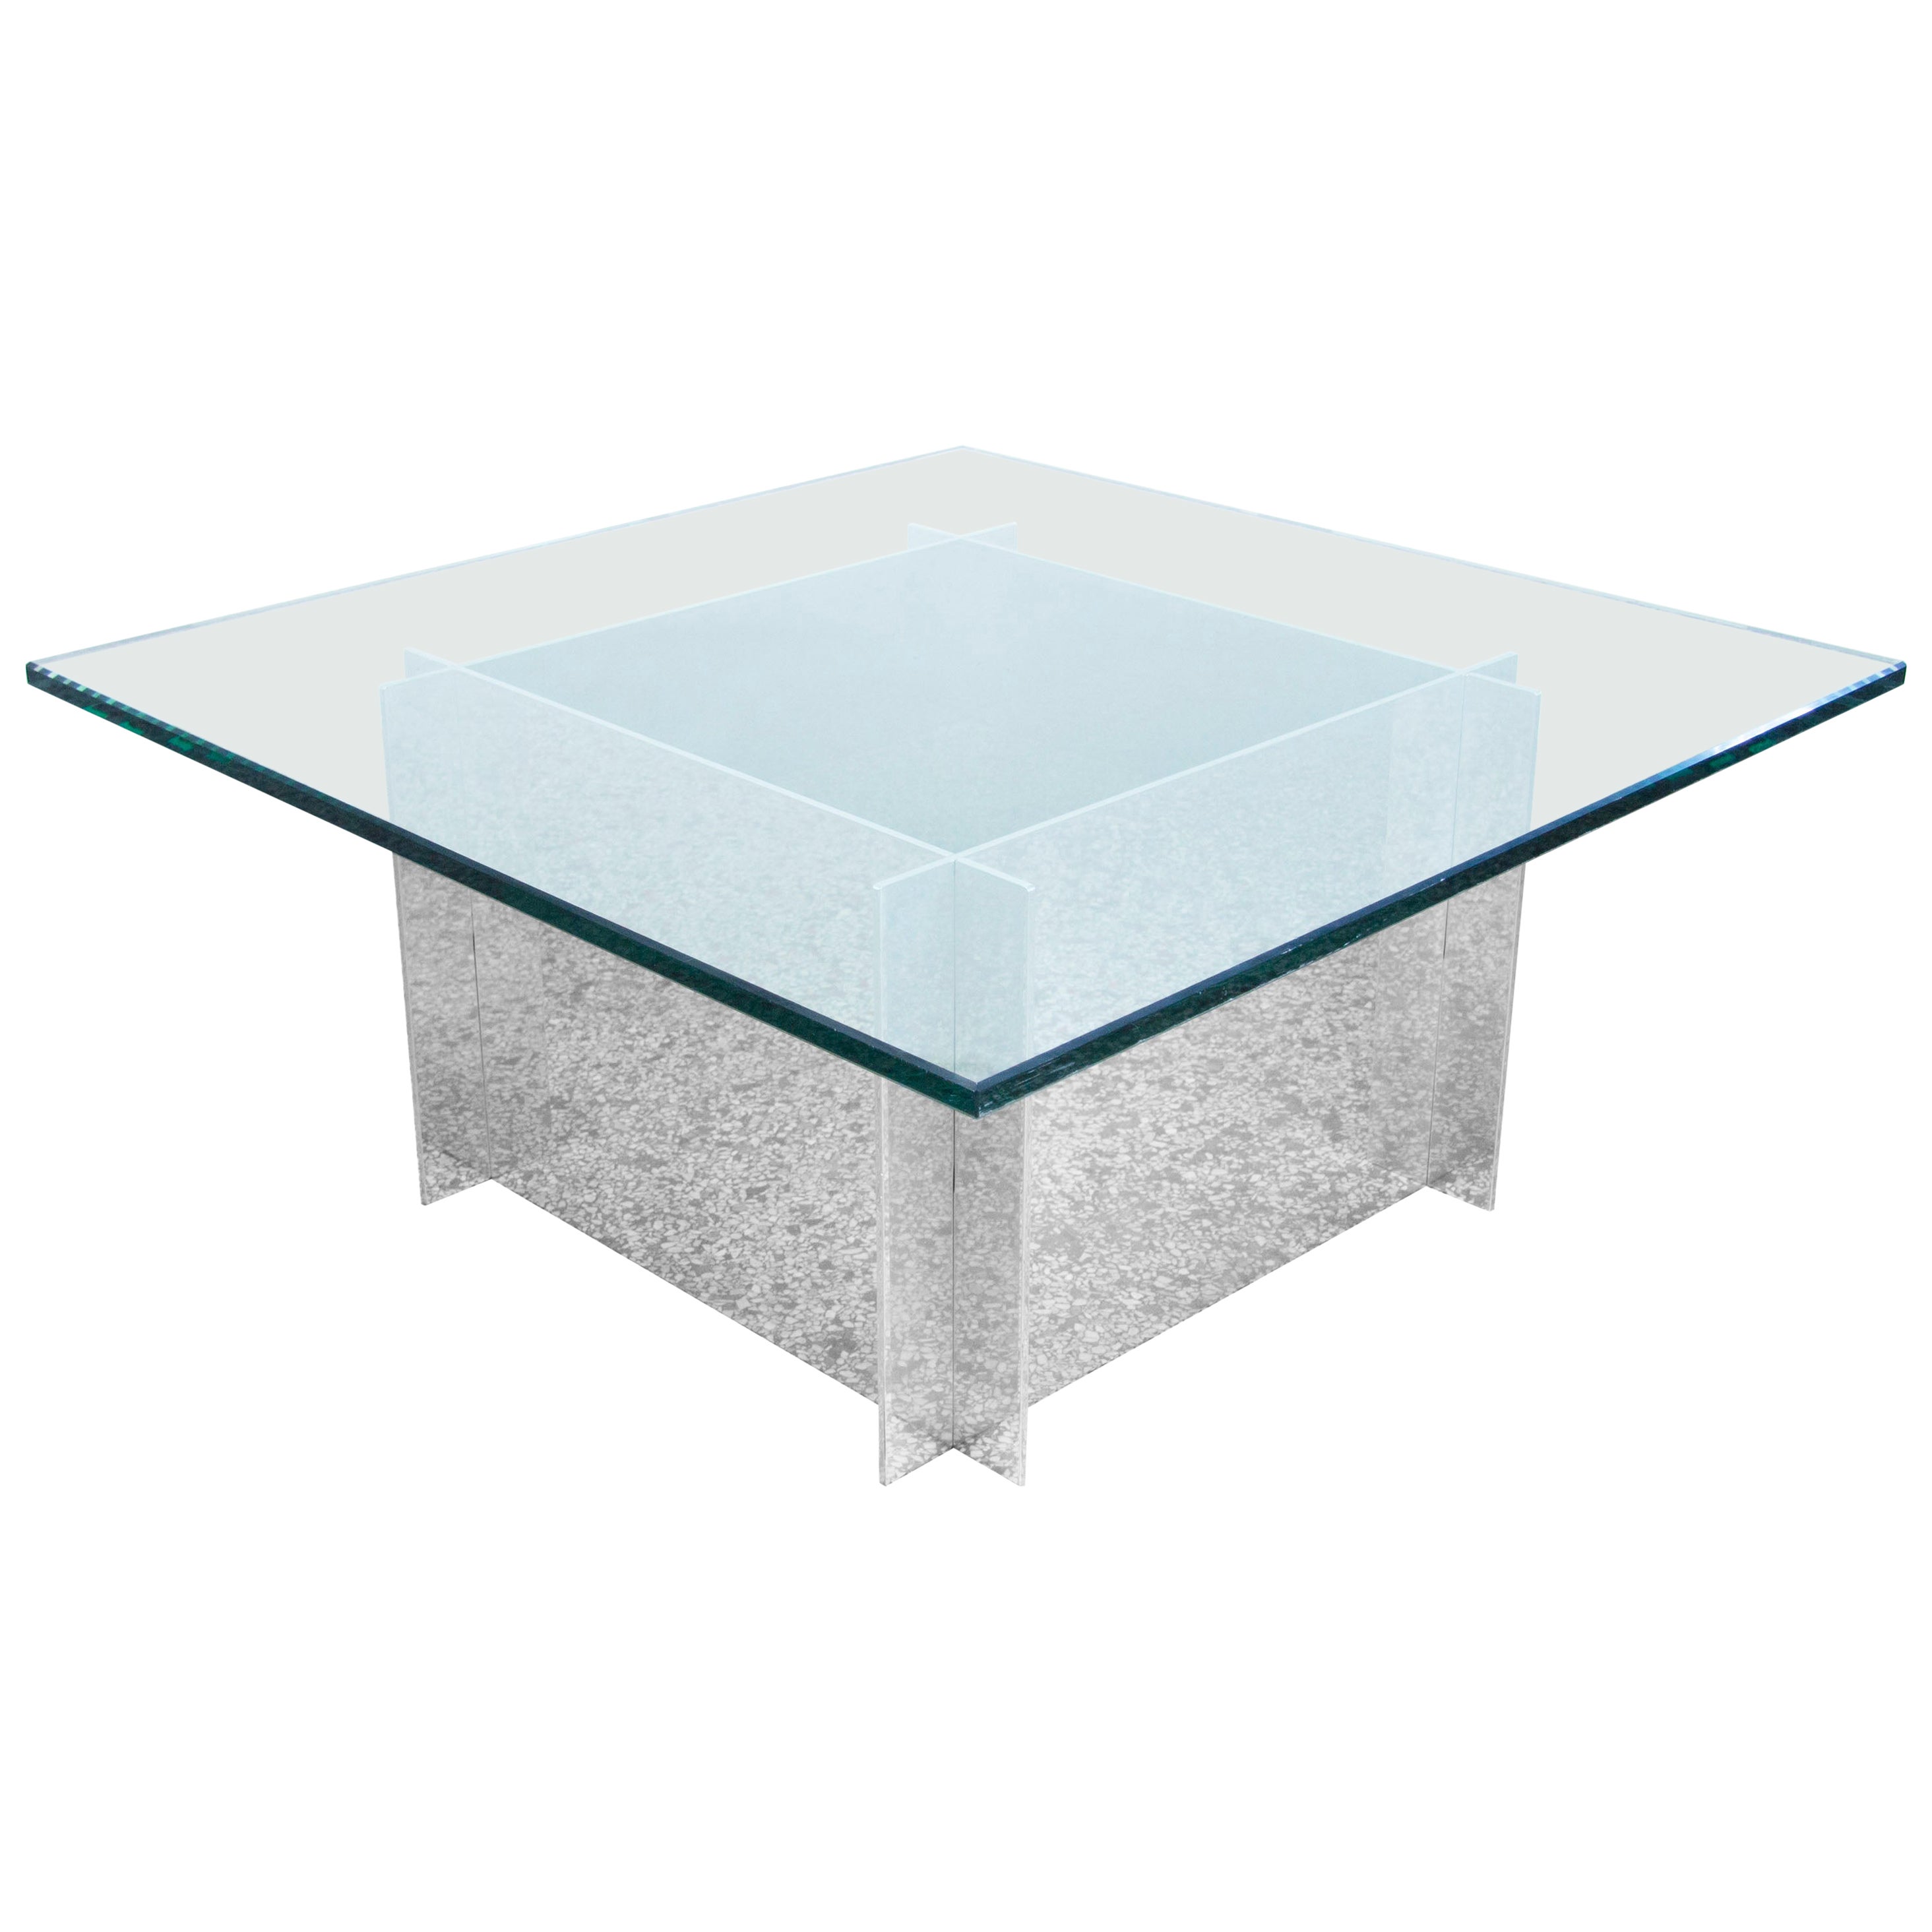 Paul Mayen Aluminum and Glass Coffee Table for Habitat